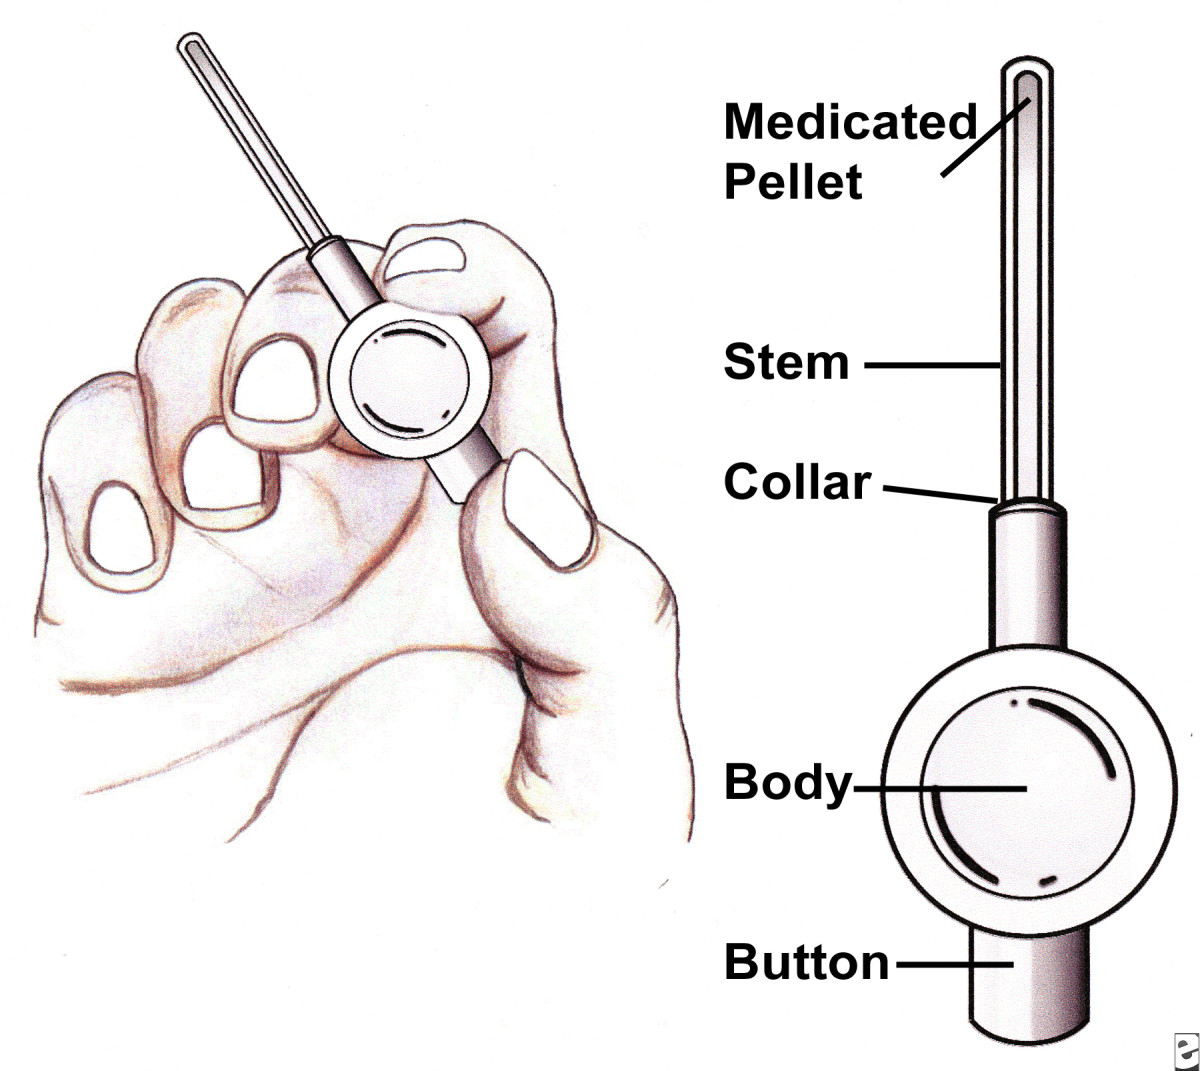 Medicated Urethral System for Erections (MUSE) applicator 